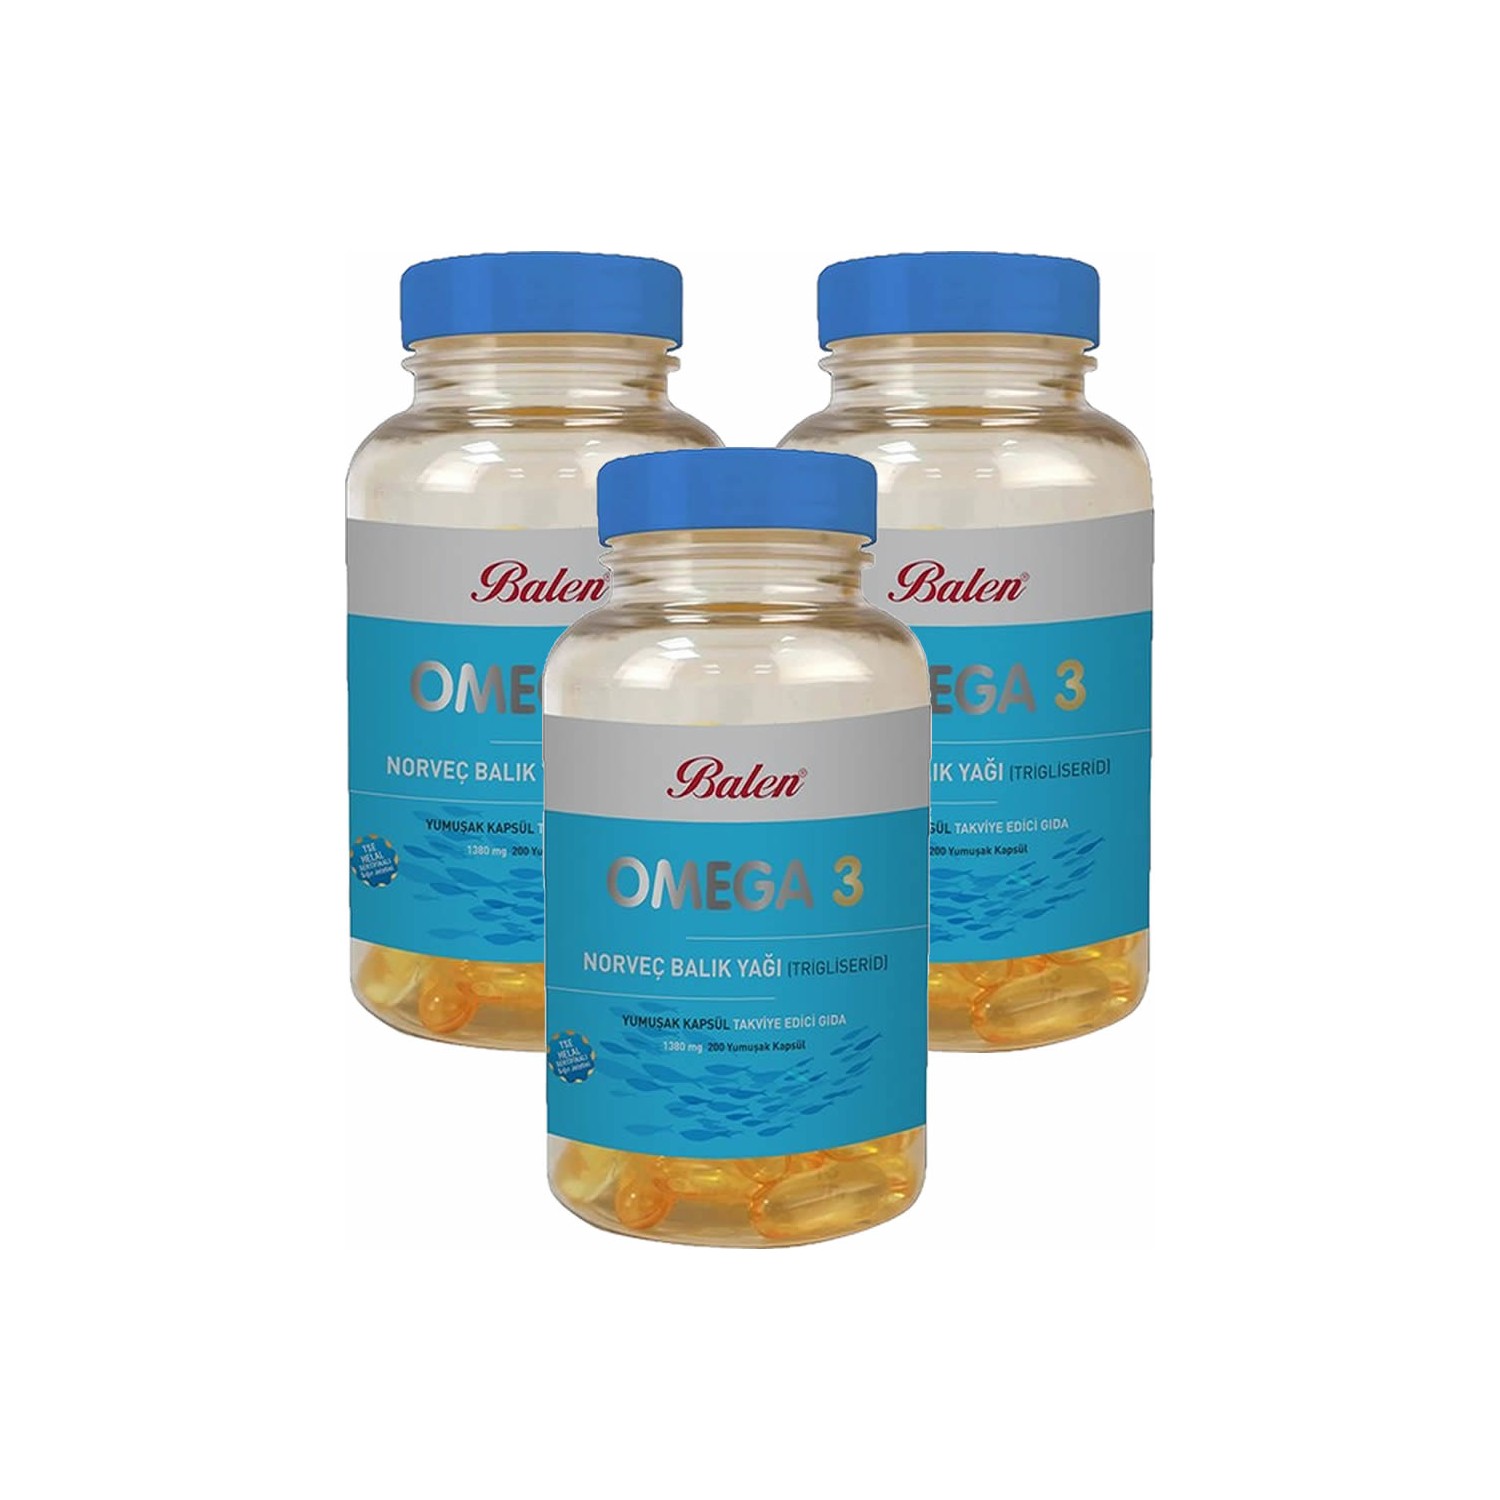 Норвежский рыбий жир Balen Omega-3 (триглицерид) 1380 мг, 3 упаковки по 200 капсул норвежский рыбий жир из печени трескиfjord 200 мл